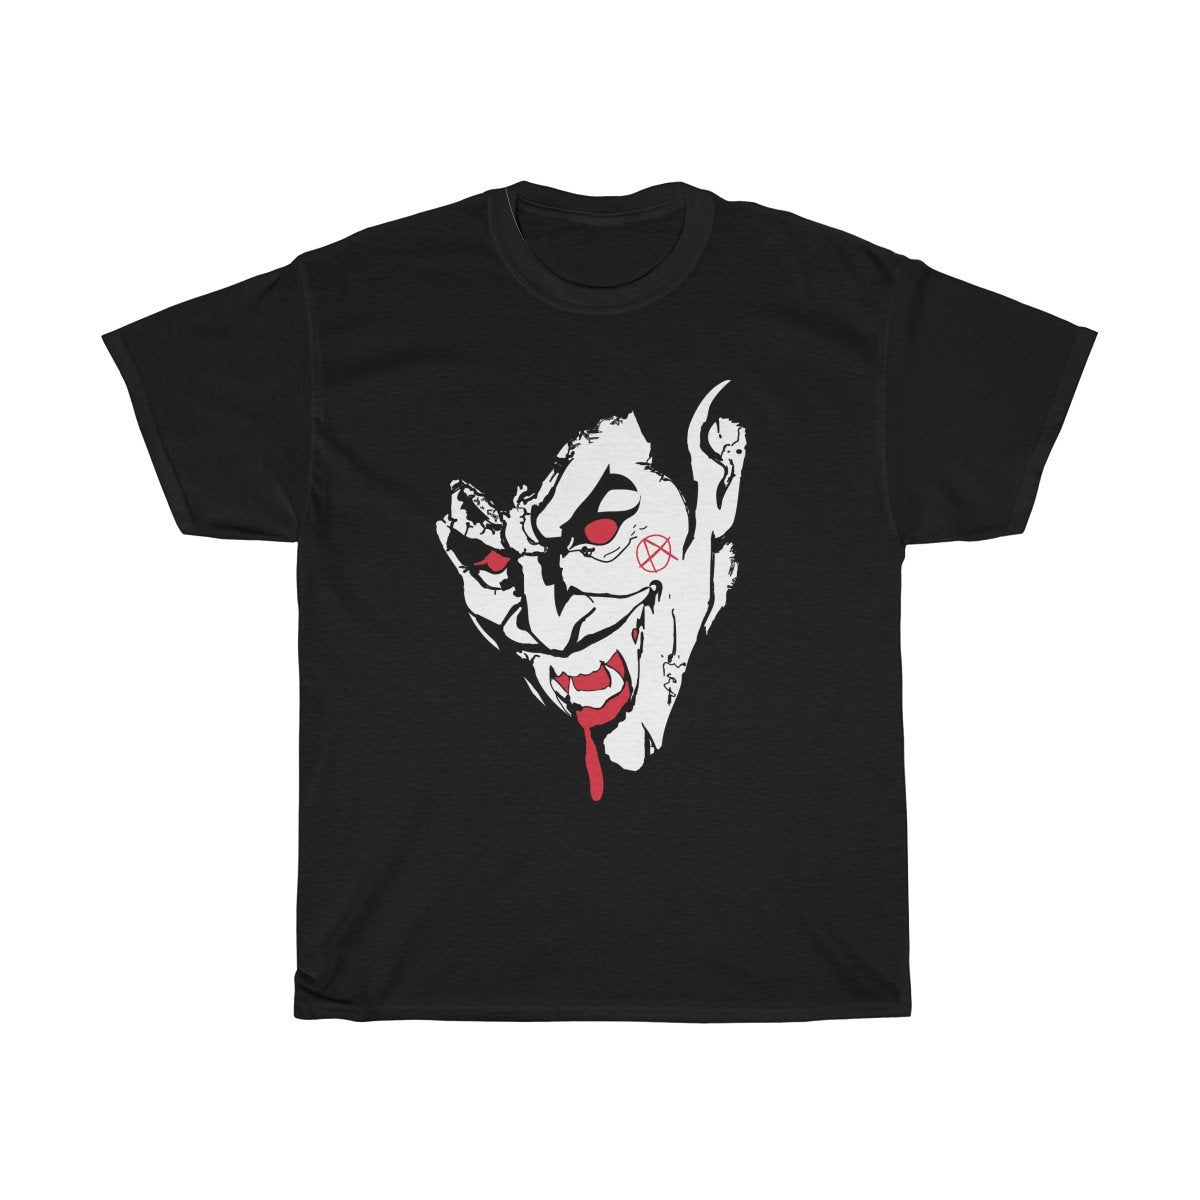 Billie Eilish Joker Vampire Tshirt